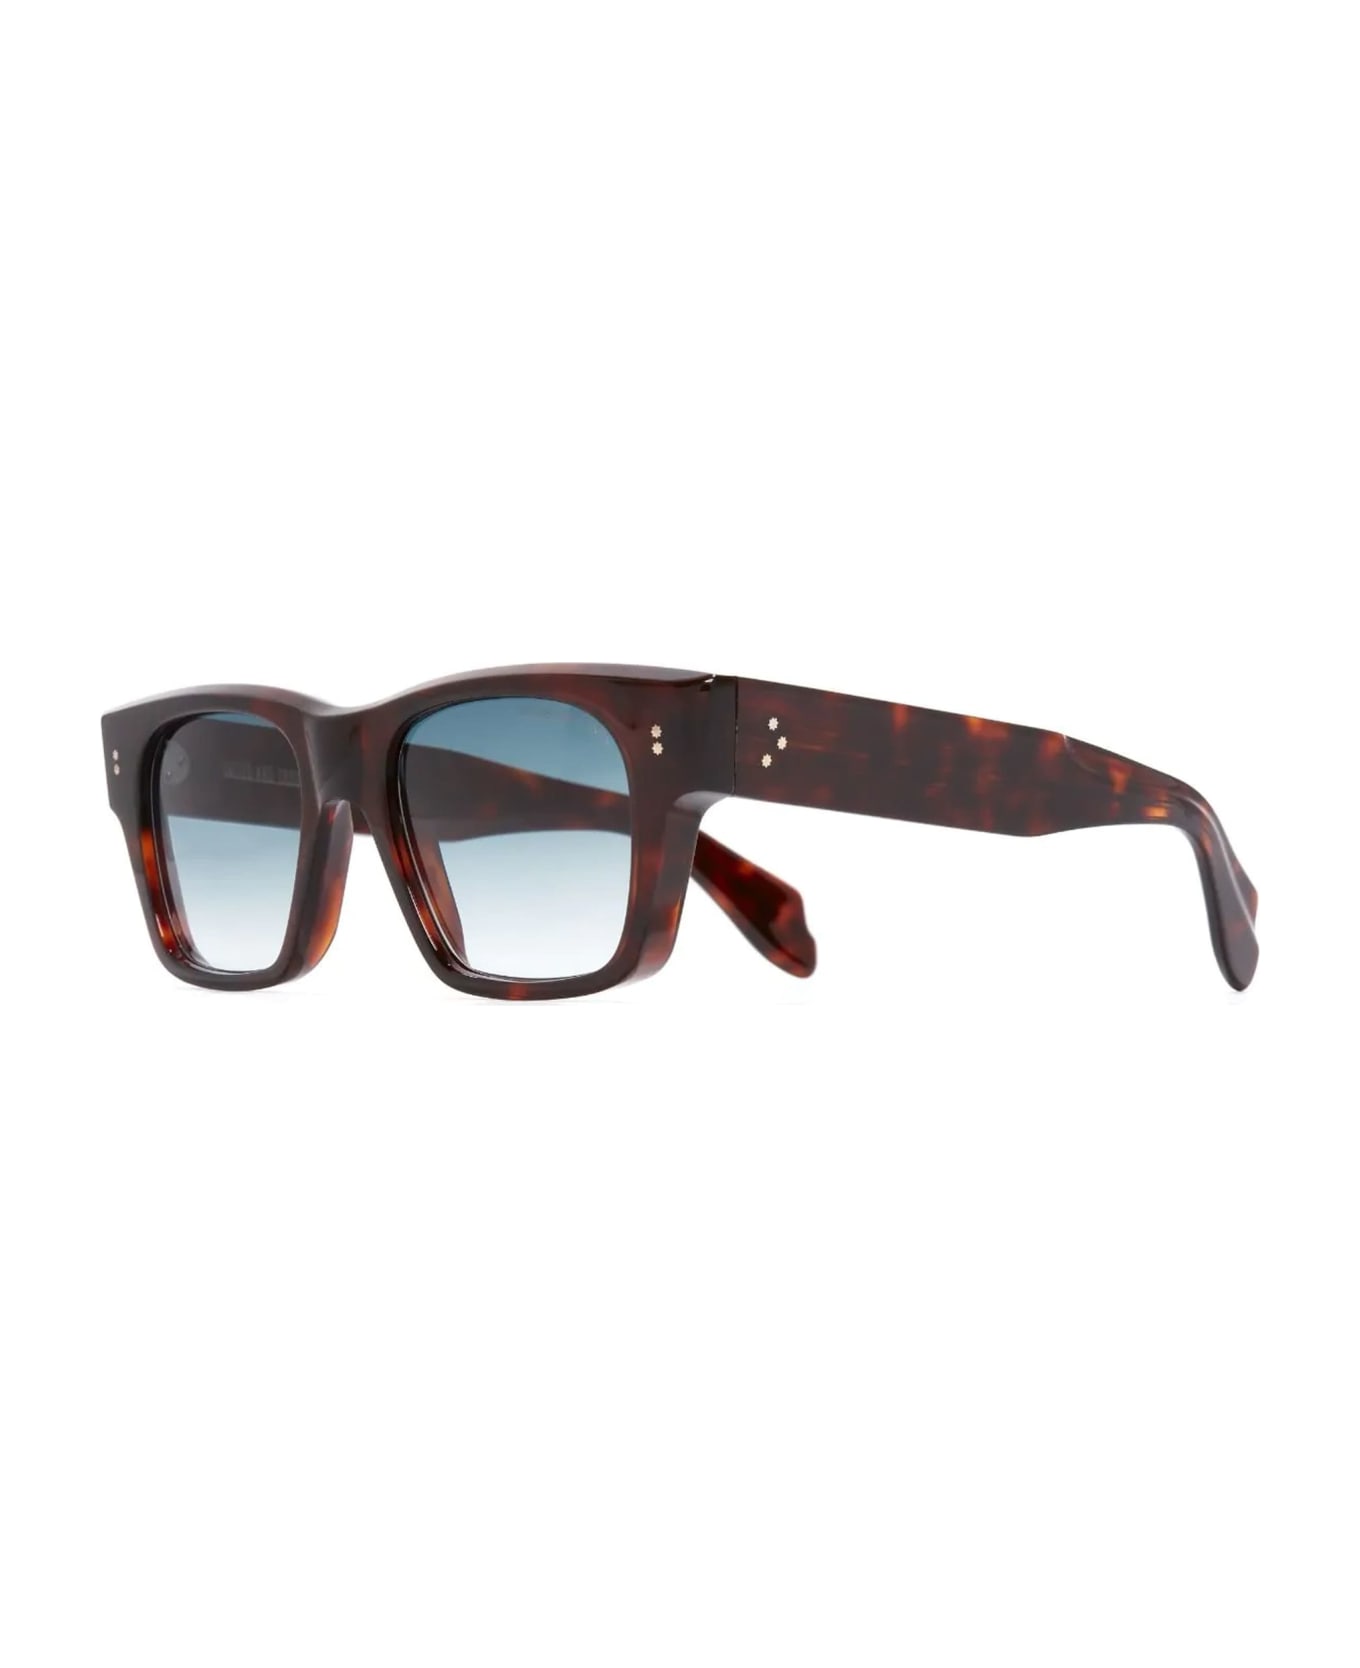 Cutler and Gross 9690 / Dark Turtle Sunglasses - brown サングラス